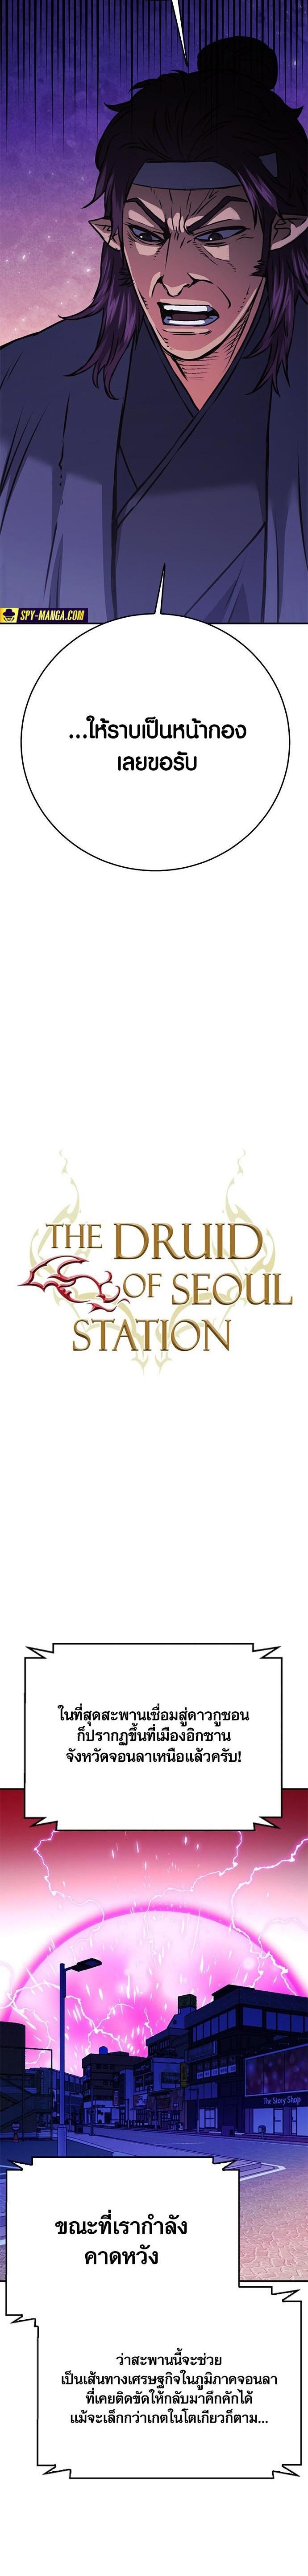 Seoul Station Druid 129 09